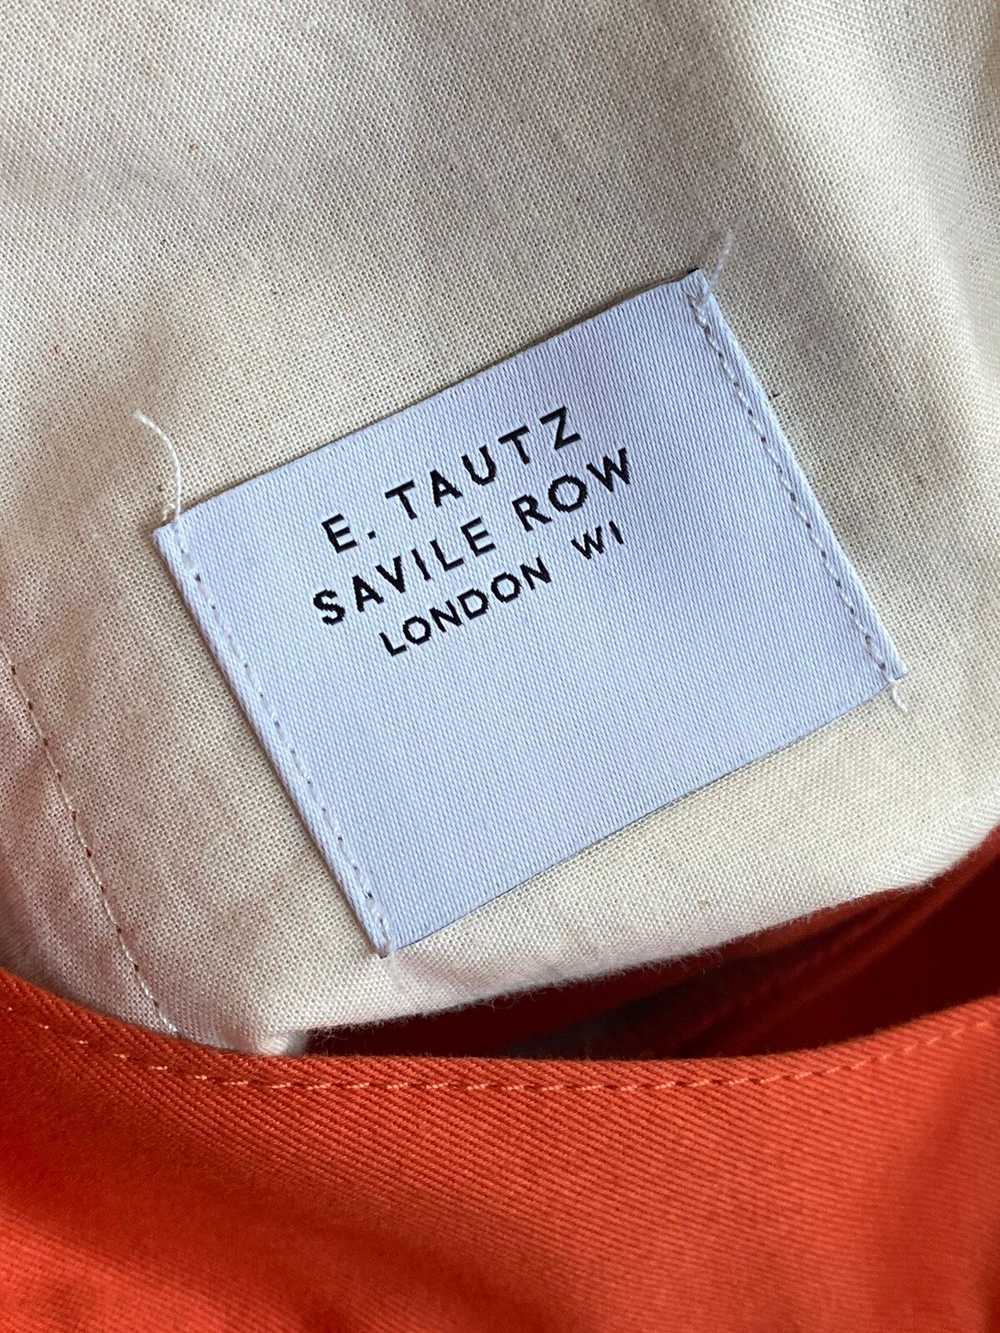 Designer × E. Tautz E. TAUTZ Savile Row Shorts - image 11